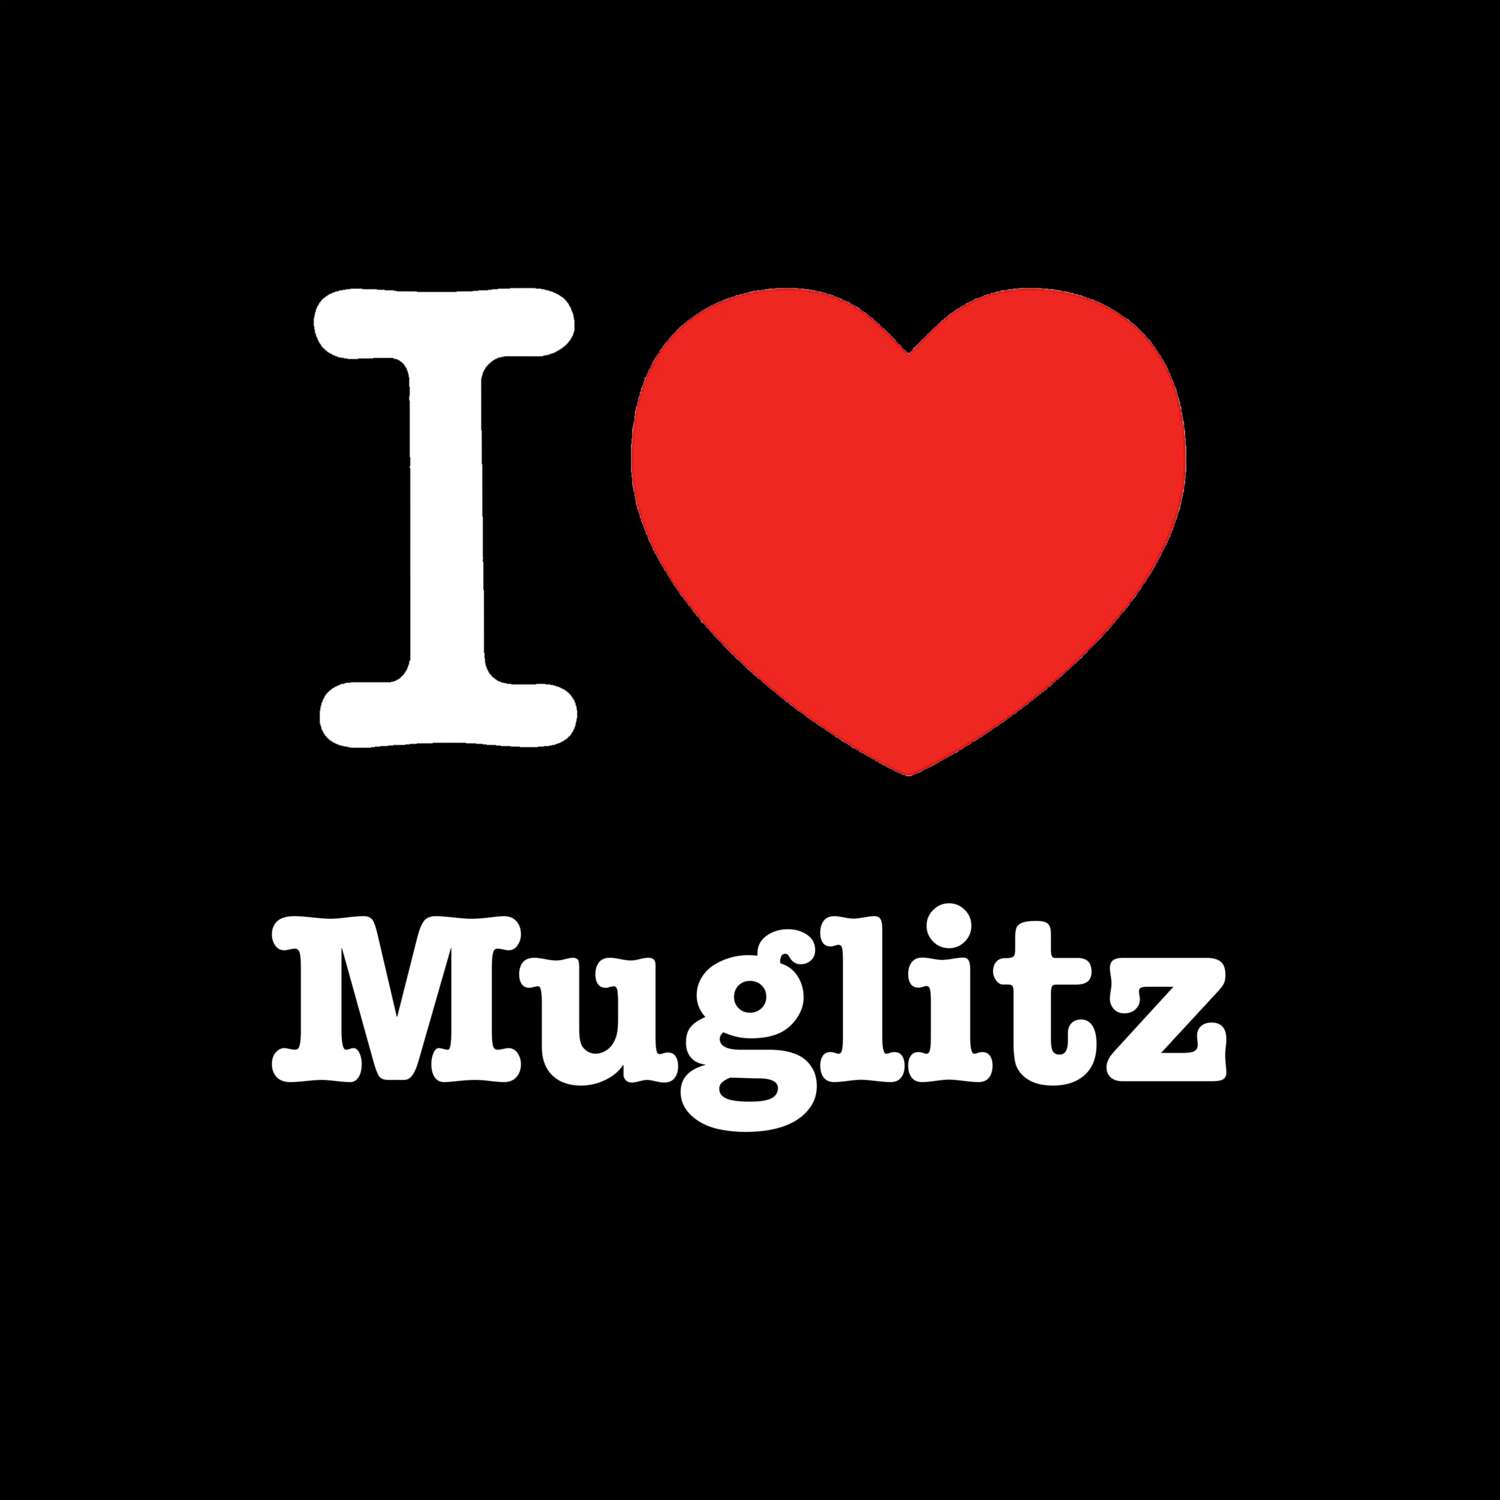 Muglitz T-Shirt »I love«